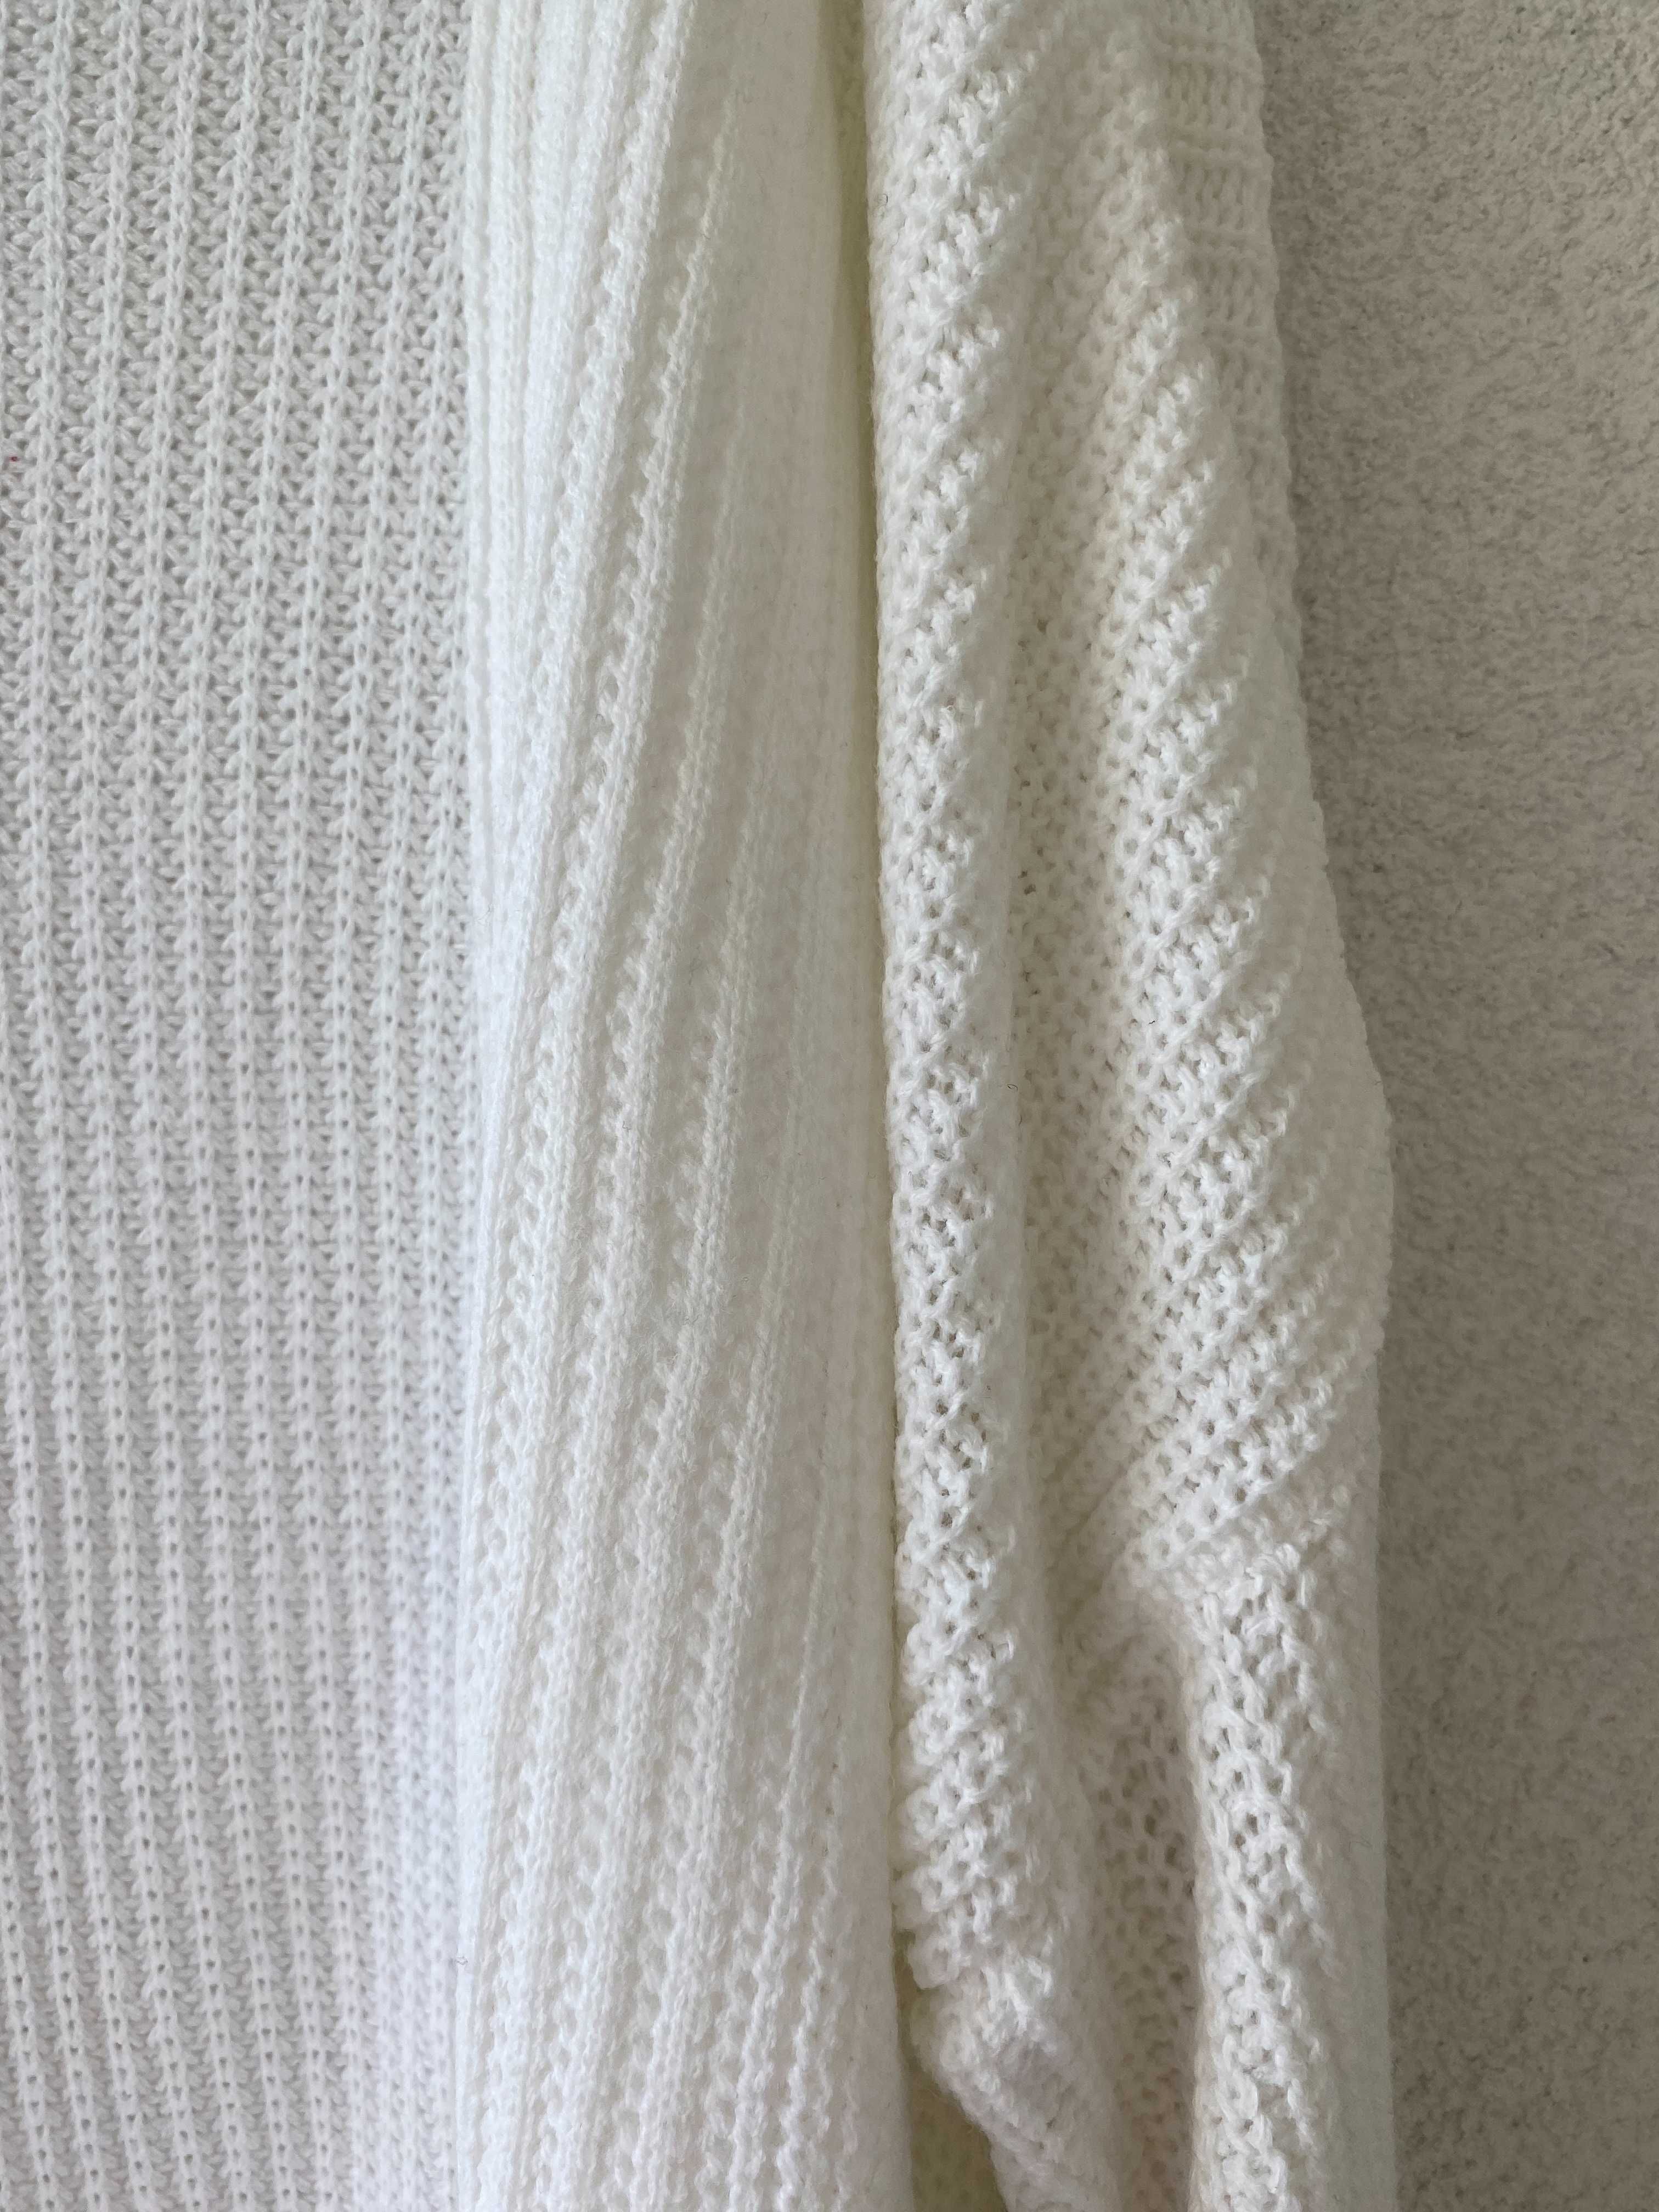 Cardigan/pulover alb, 'Reserved', de primavara, nou, marime M/L